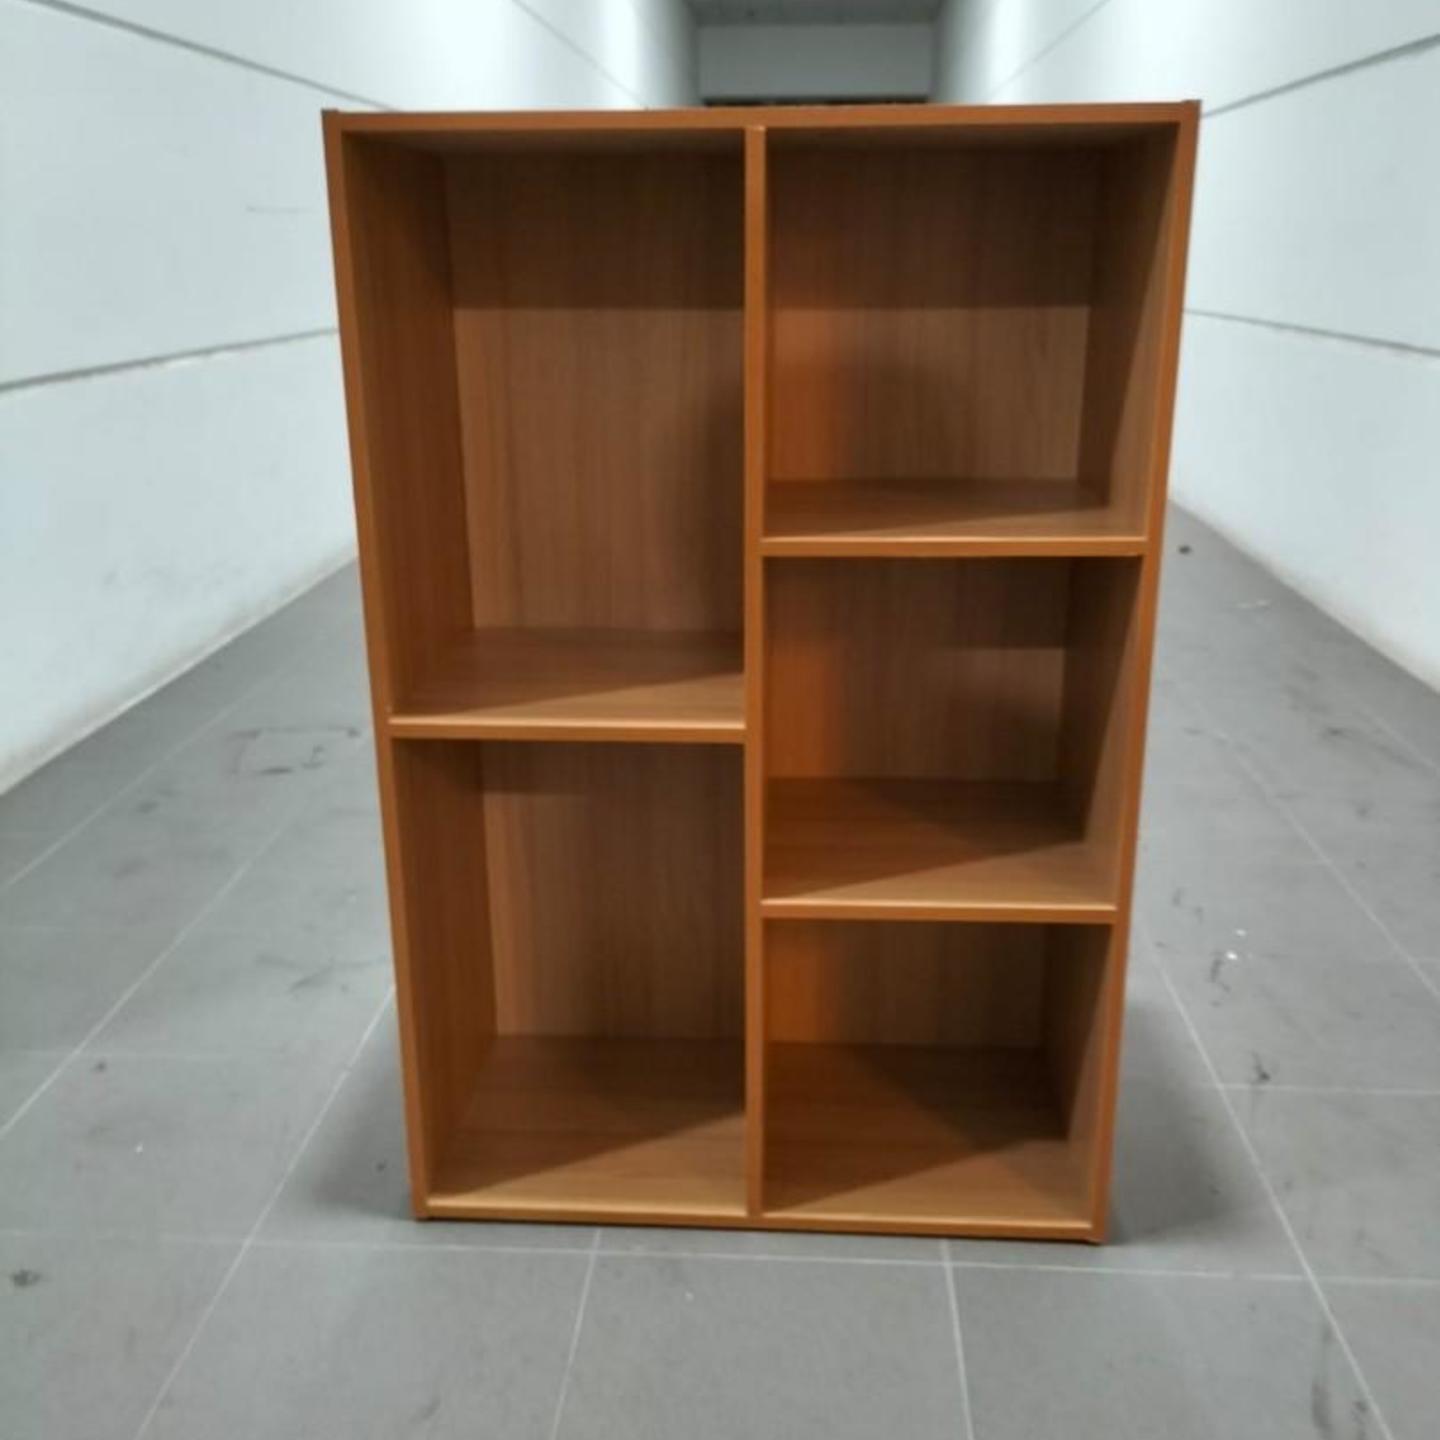 KEYA 5 Cube Display Bookshelf in CHERRY OAK